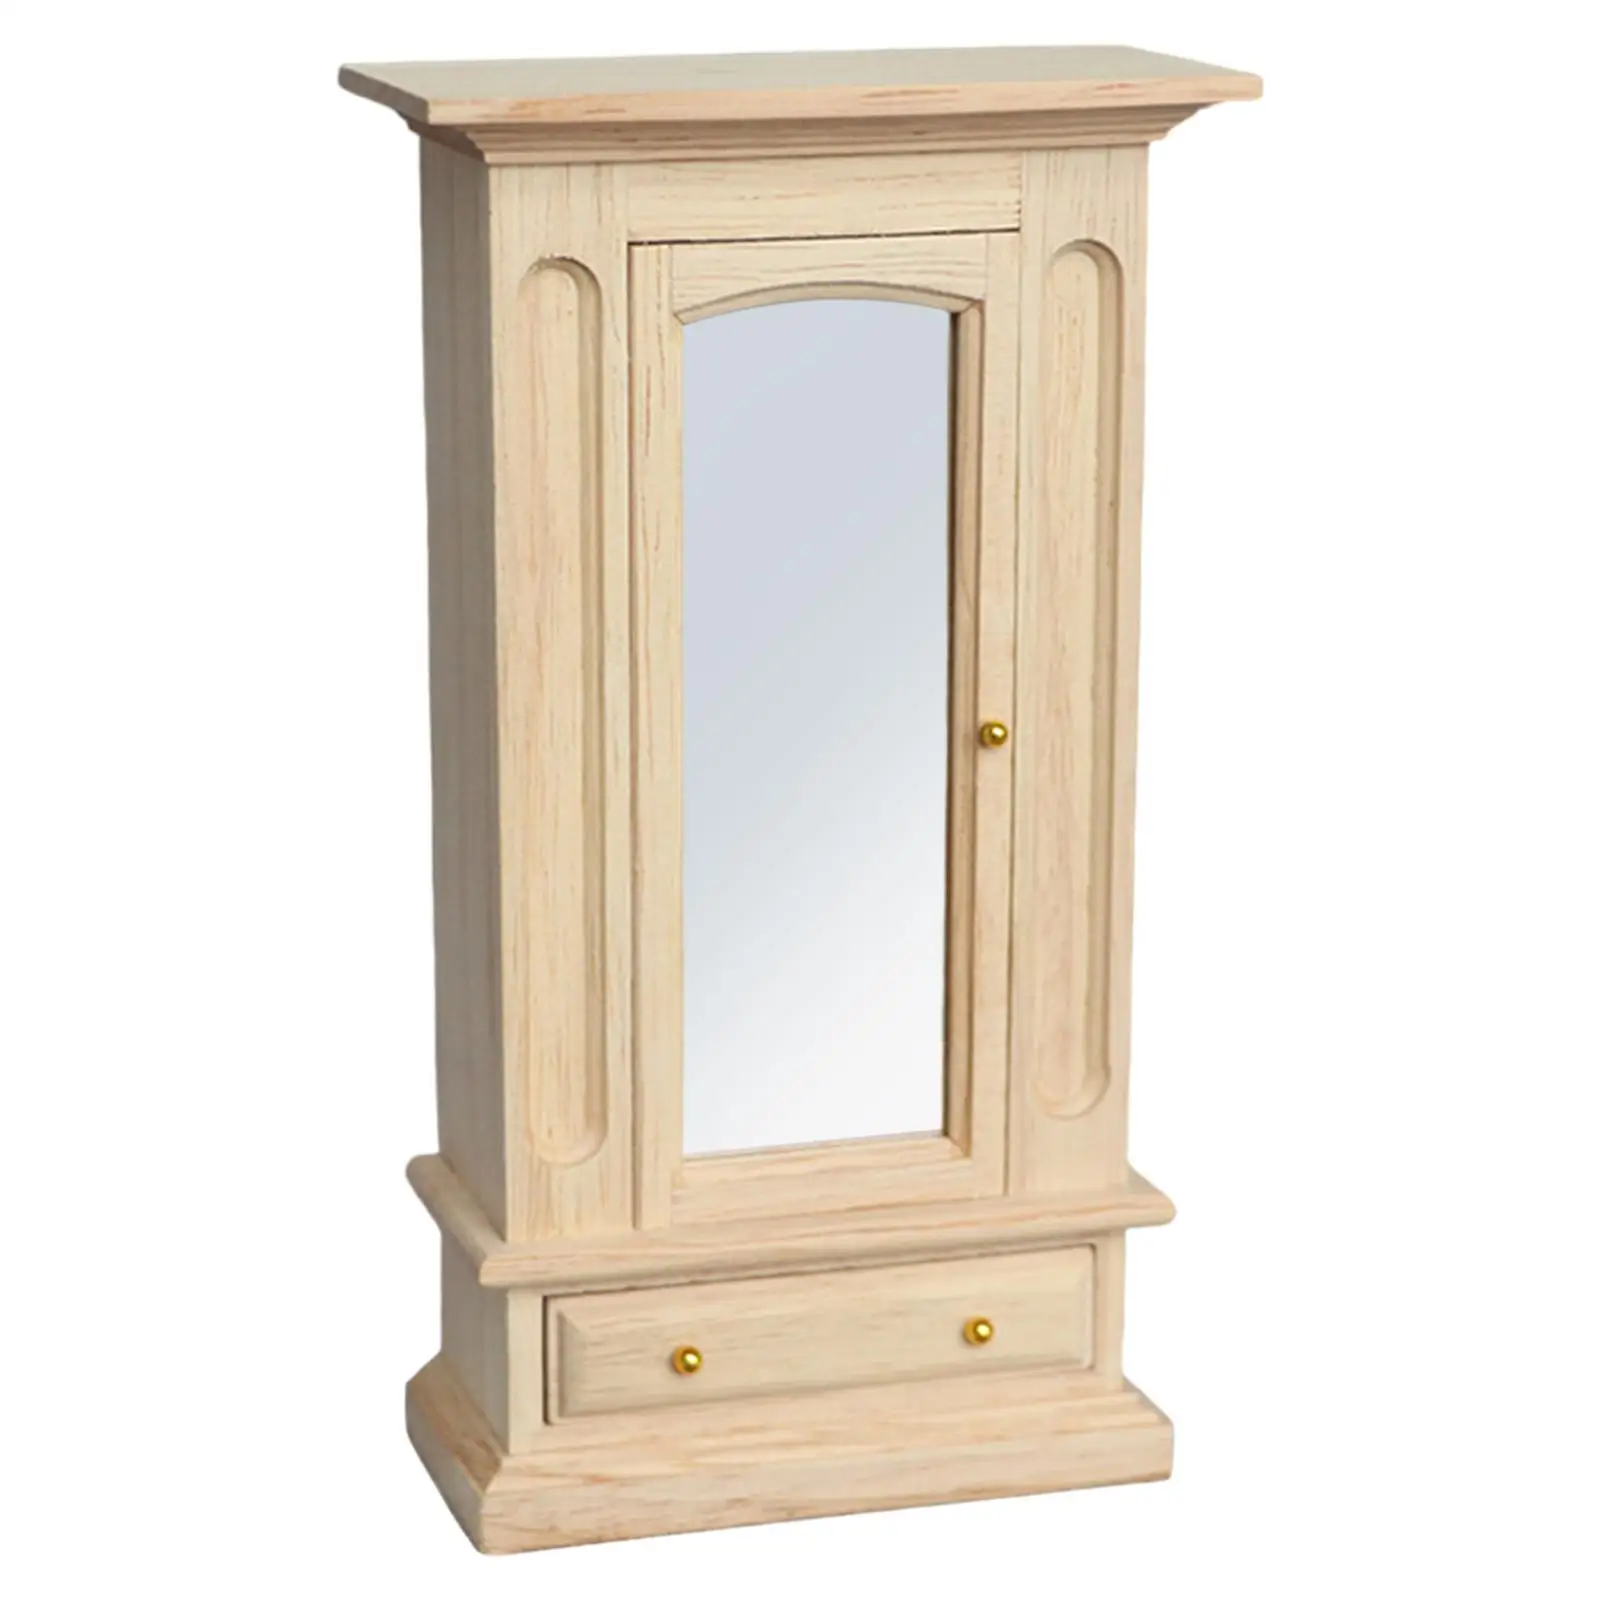 Unpainted Wood Wardrobe Mirror Closet for 1:12 Dollhouse Furniture Bedroom